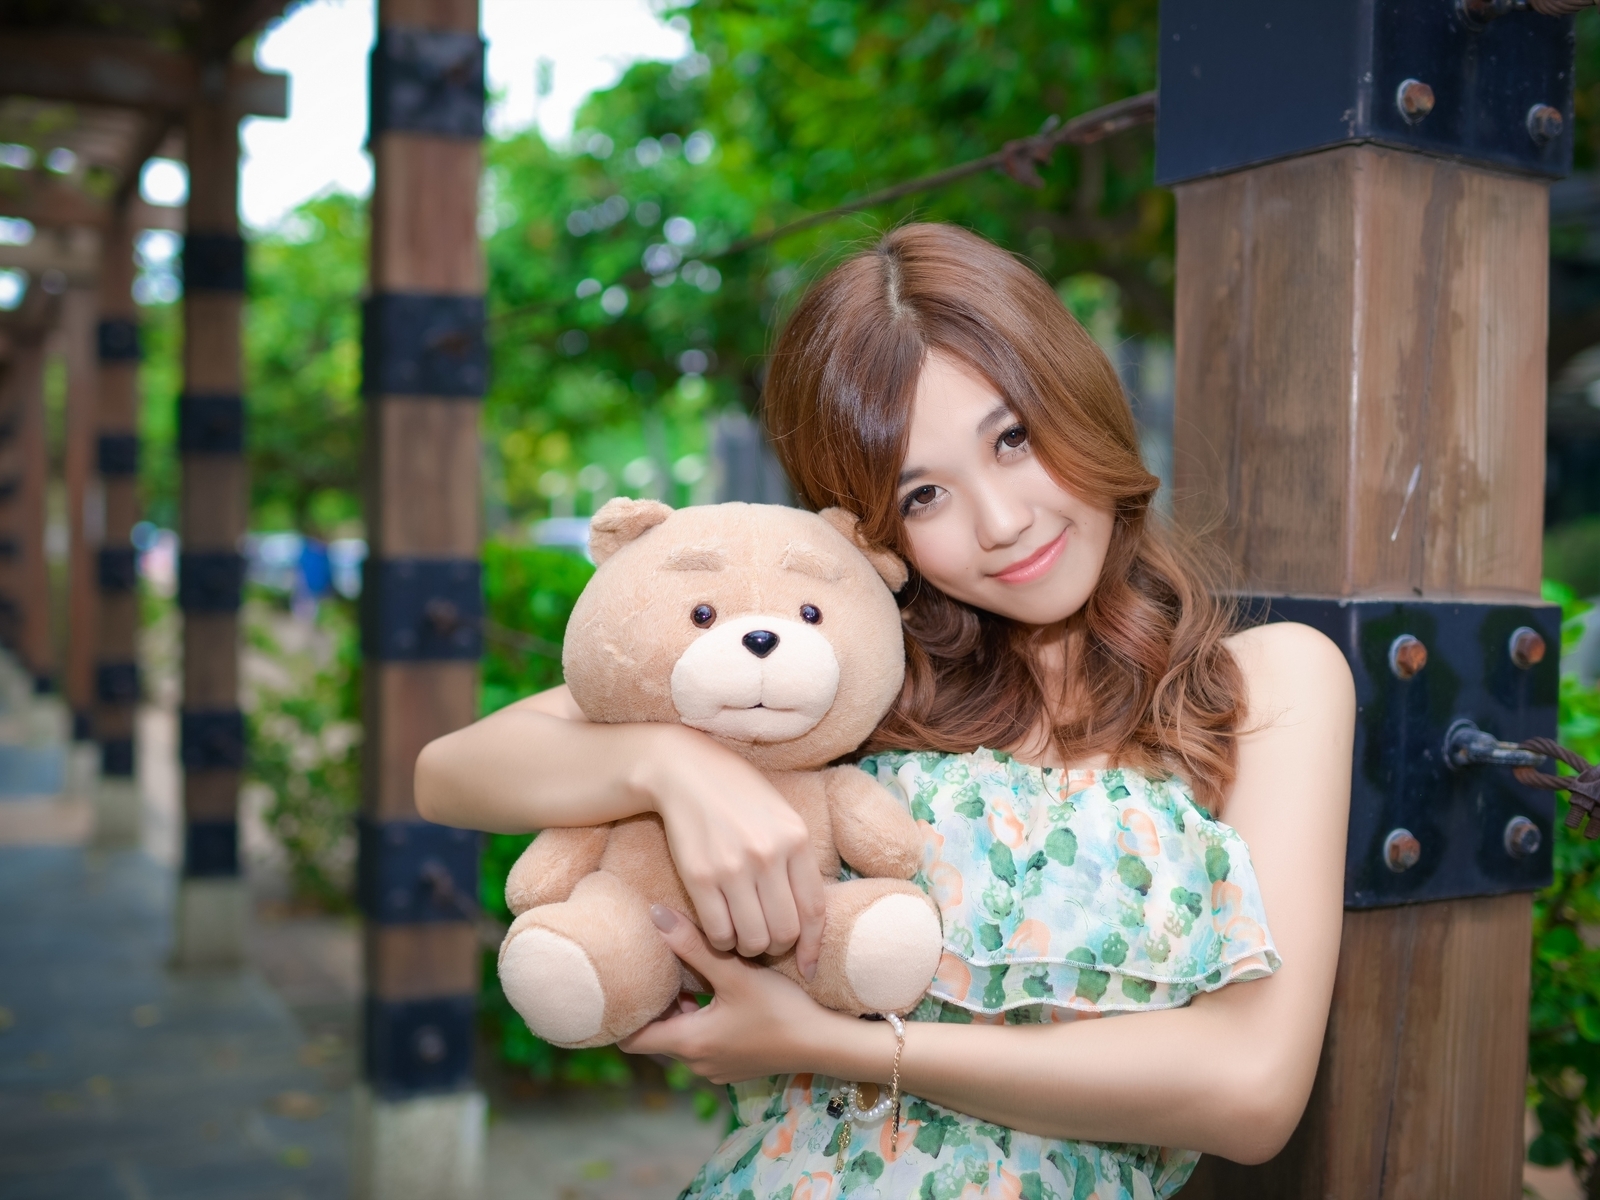 Image: Girl, asian, toy, teddy bear, mood, hugs